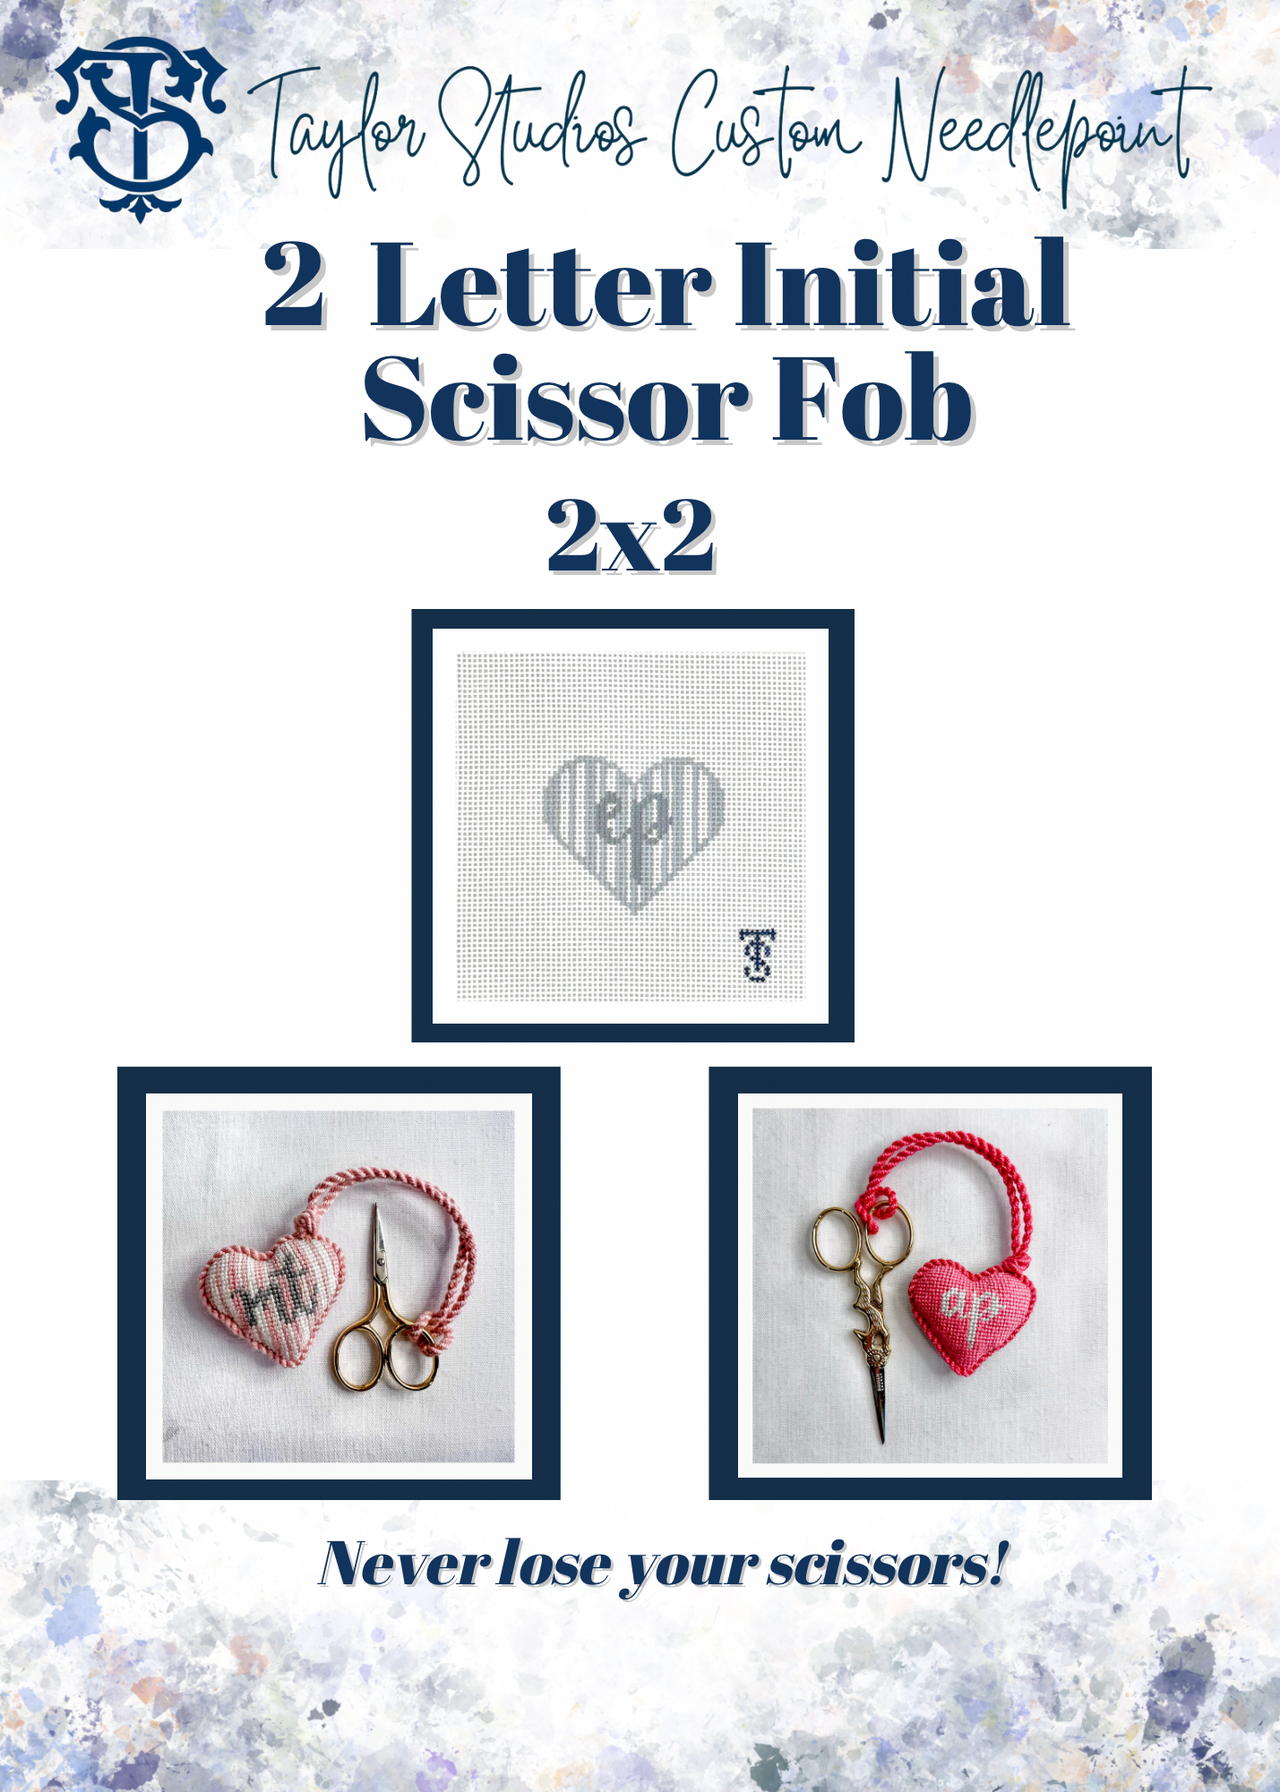 2 Letter Initials Scissor Fob